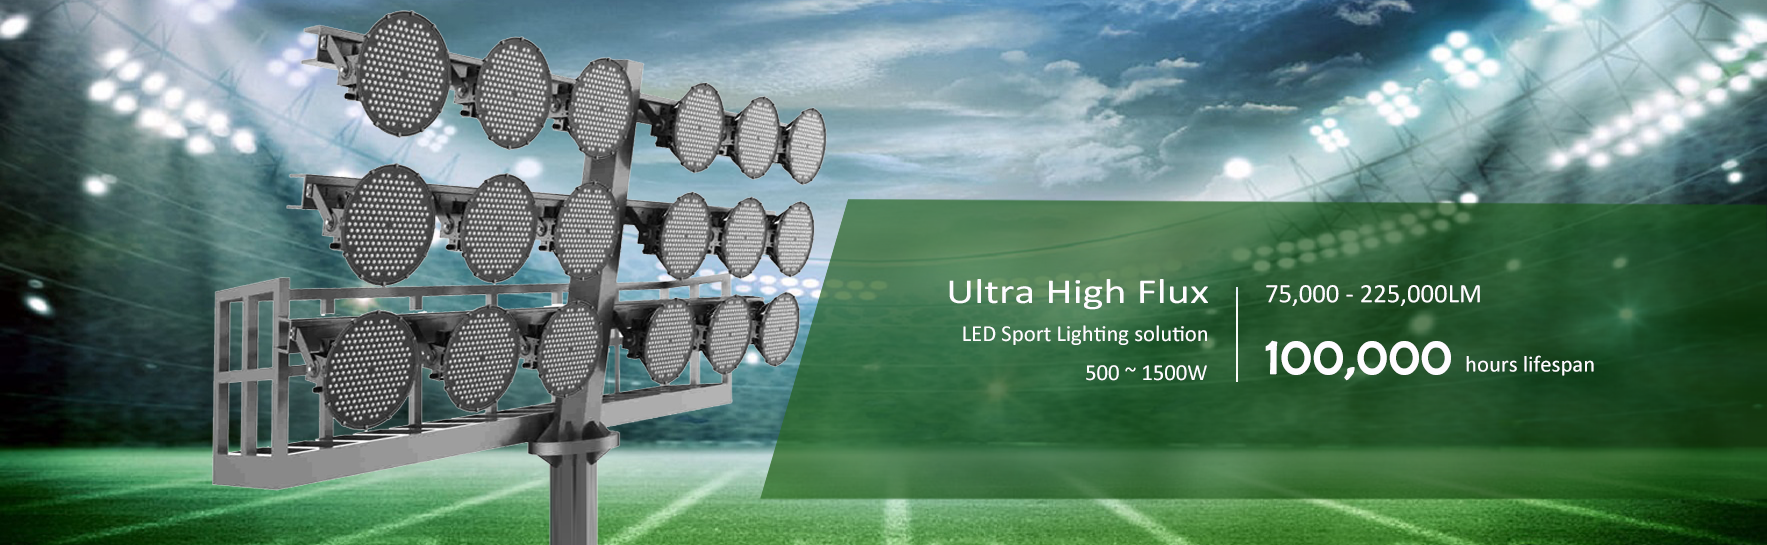 High Power LED Square/Stadium Light